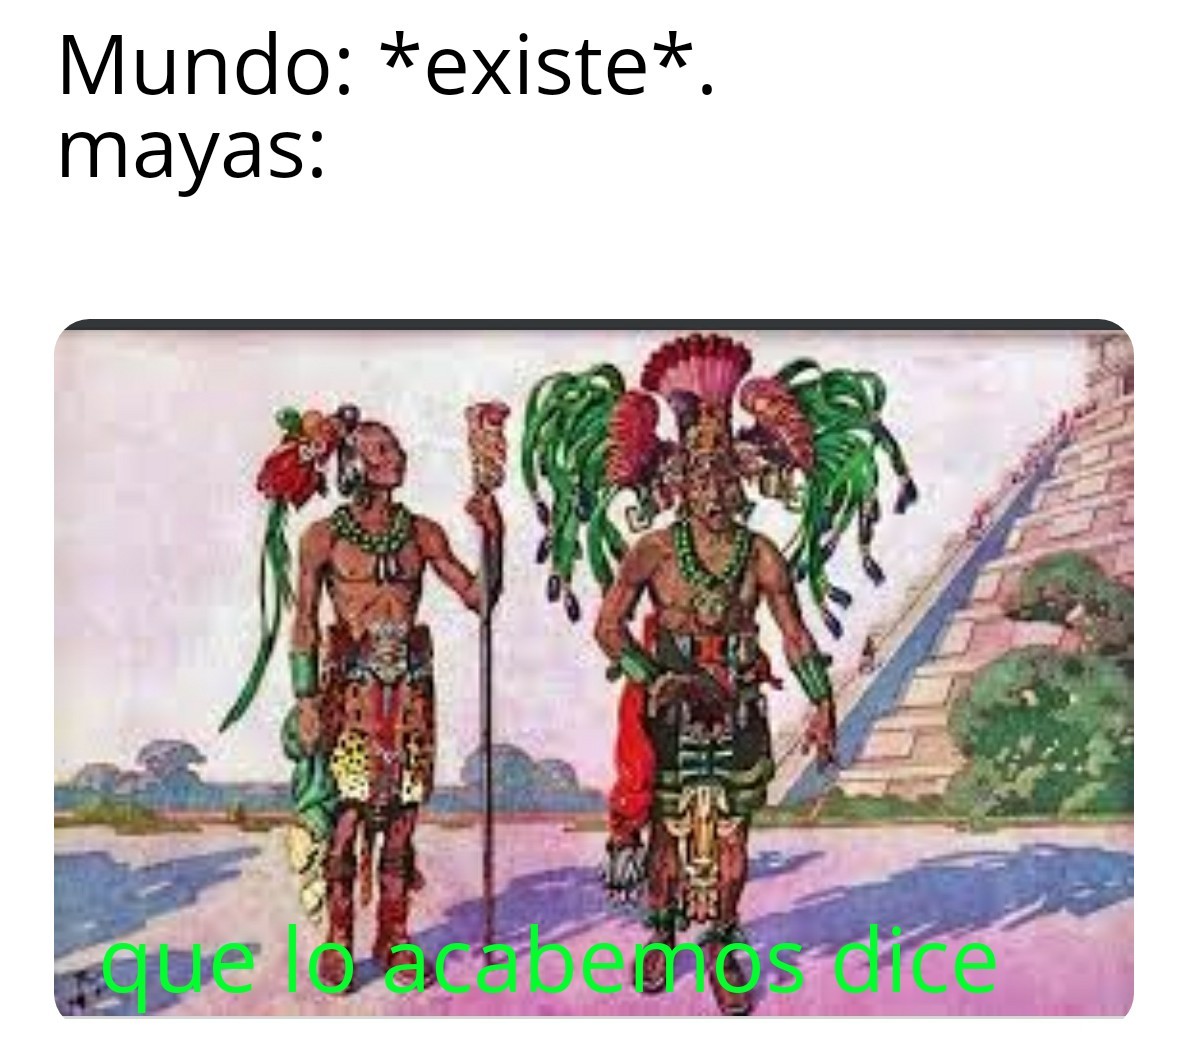 Los mayas berracos - meme